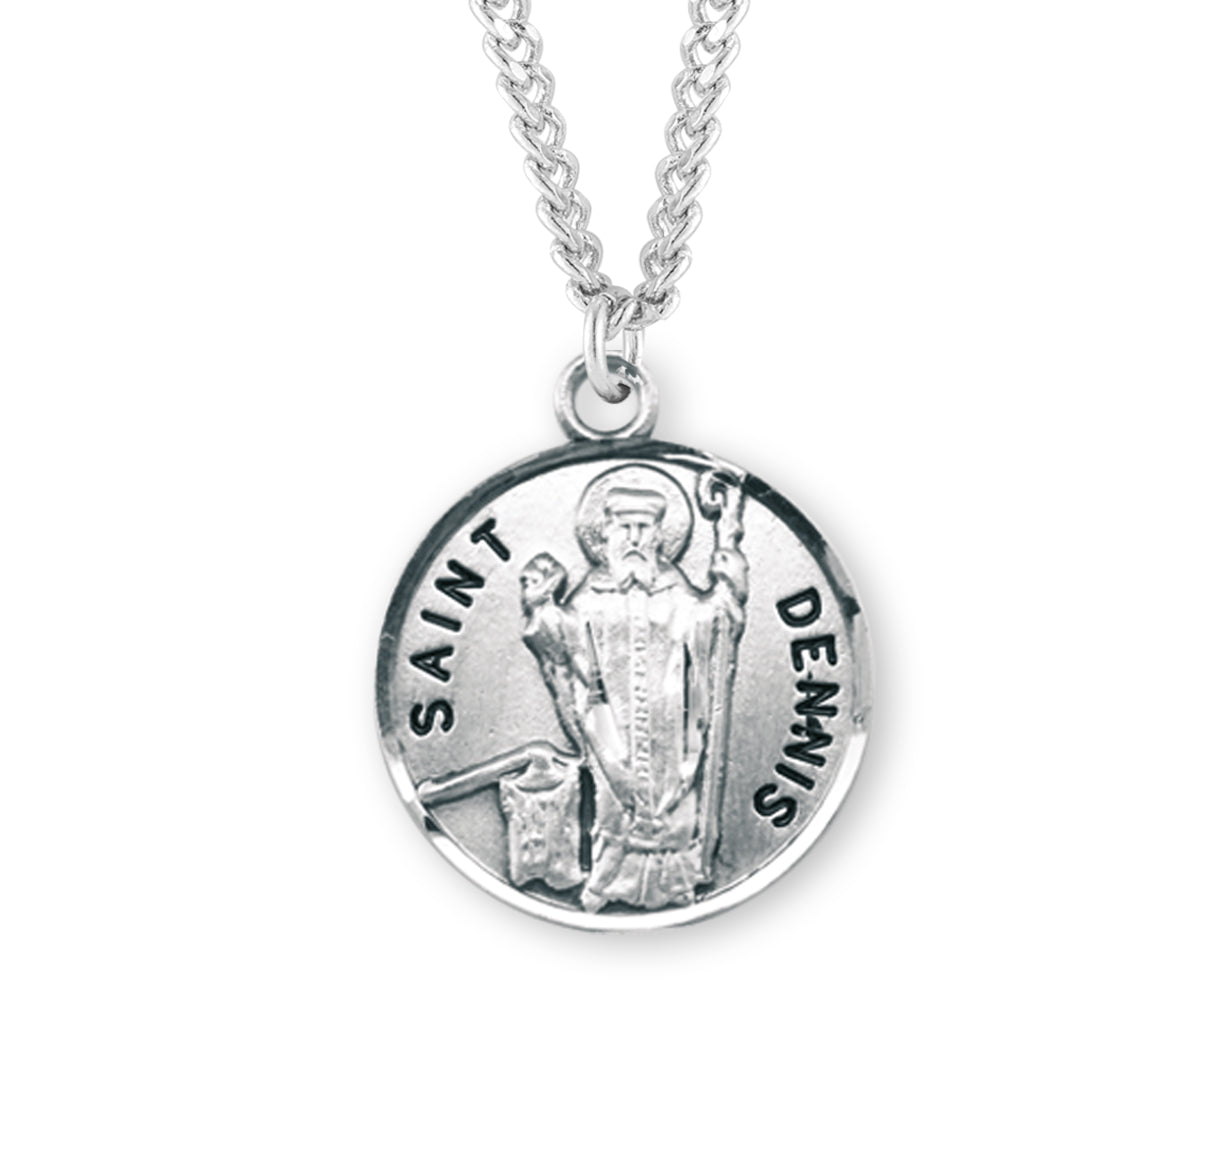 Patron Saint Dennis Round Sterling Silver Medal